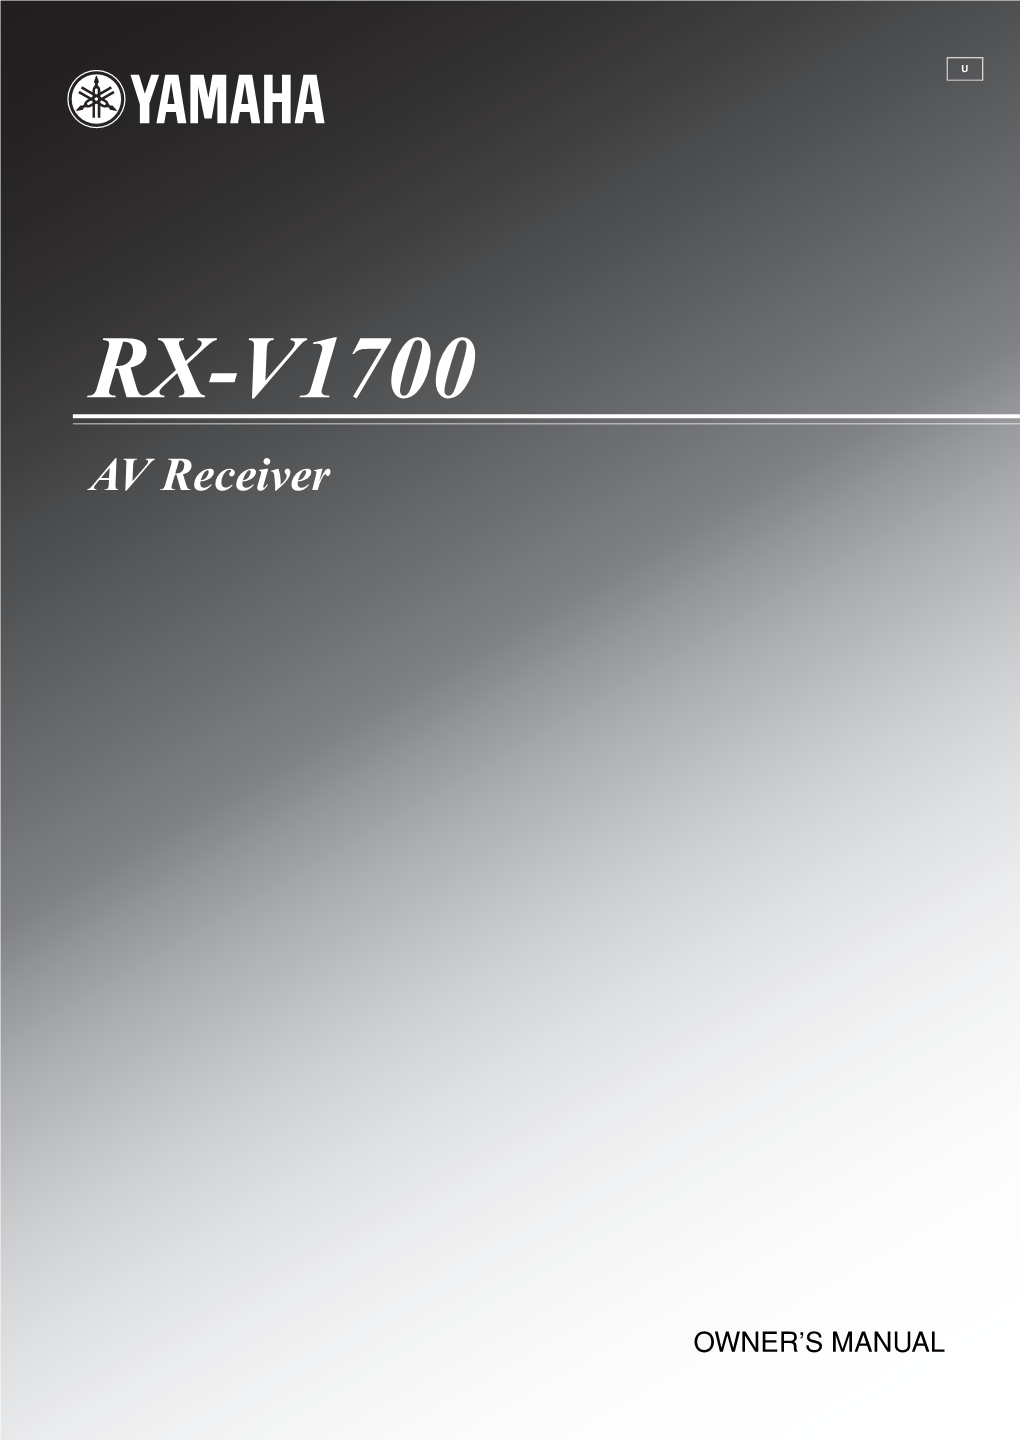 RX-V1700 U-Cv.Fm Page 1 Monday, May 8, 2006 3:54 PM